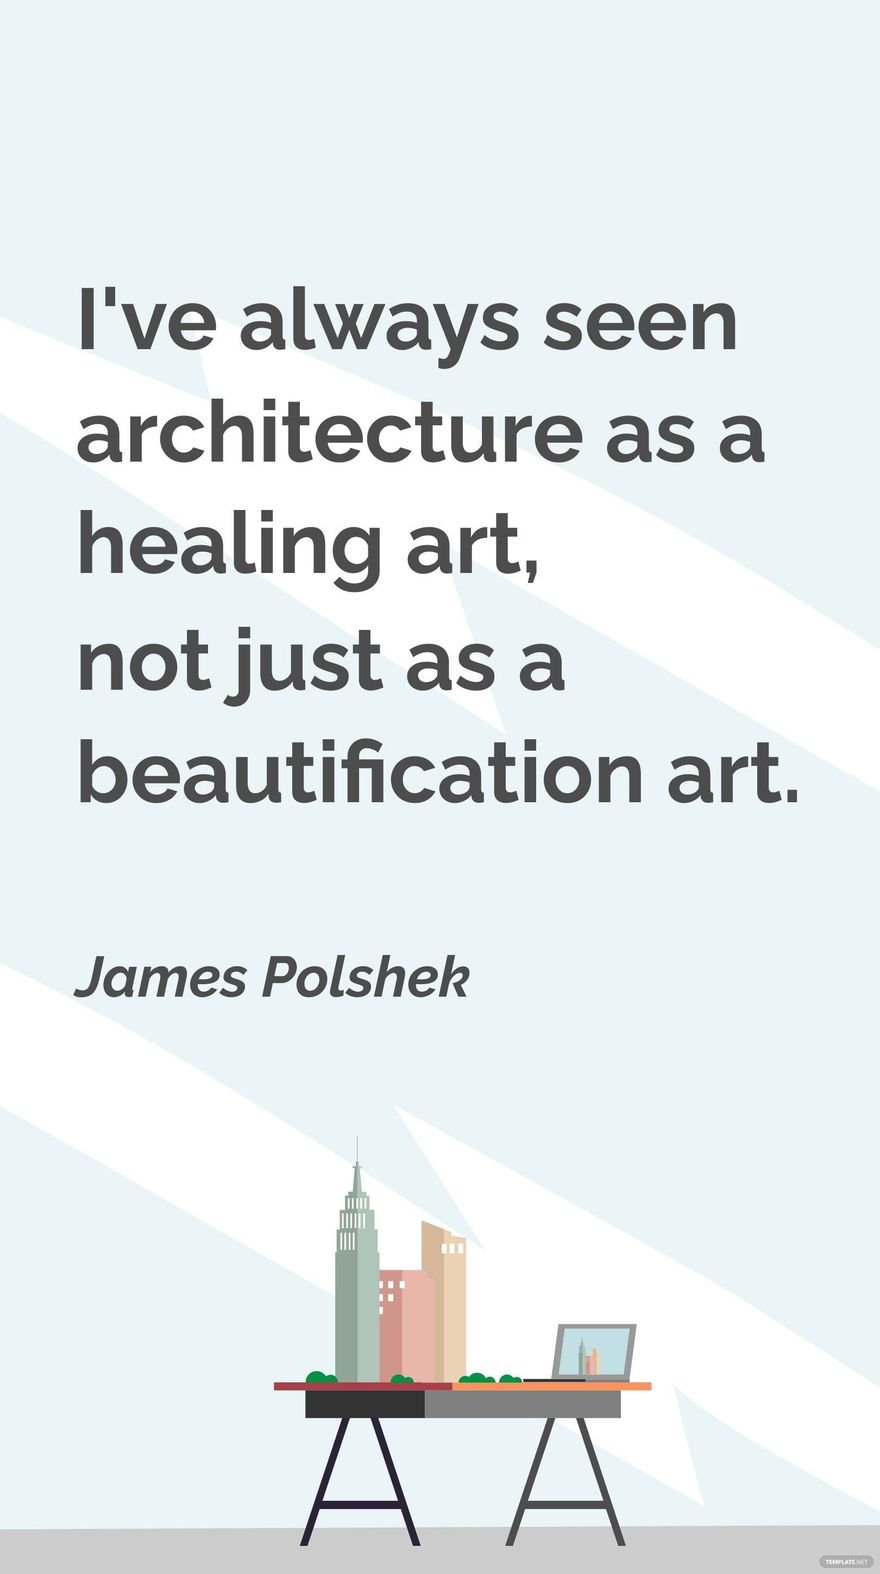 Free James Polshek - I've always seen architecture as a healing art, not just as a beautification art. in JPG